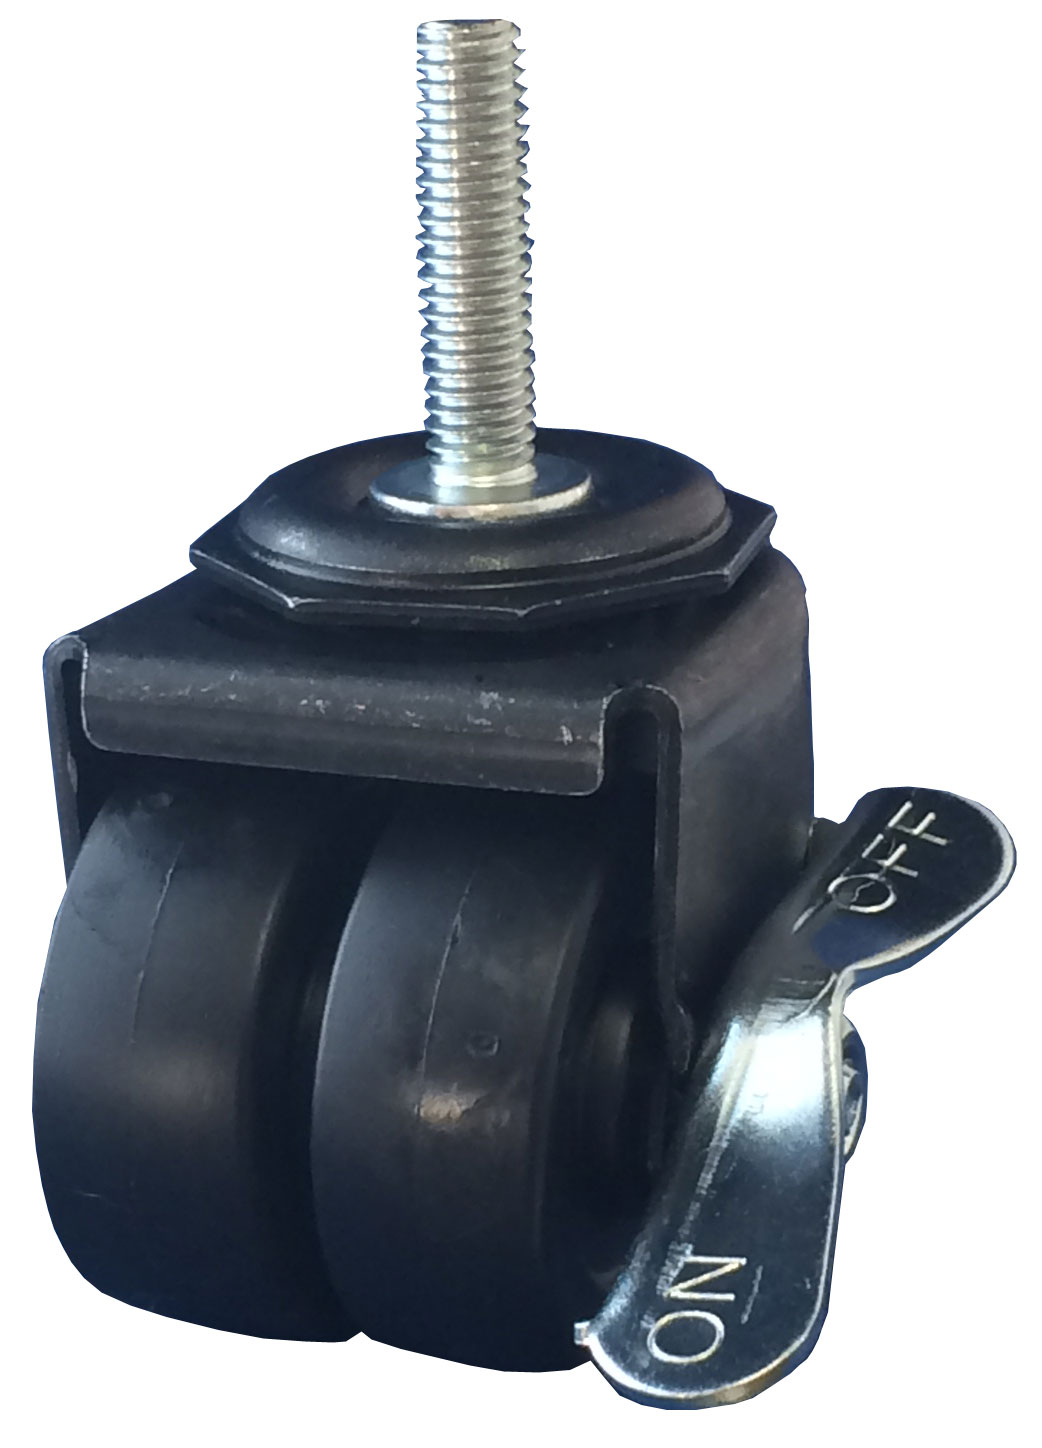 Caster; Dual Wheel; Swivel; 2" x 7/8" (x2); Rubber (Non-marking); Threaded Stem (3/8"-16TPI x 1-1/2"); Black Rig; Plain bore; 225#; Side Friction Brake (Item #65735)